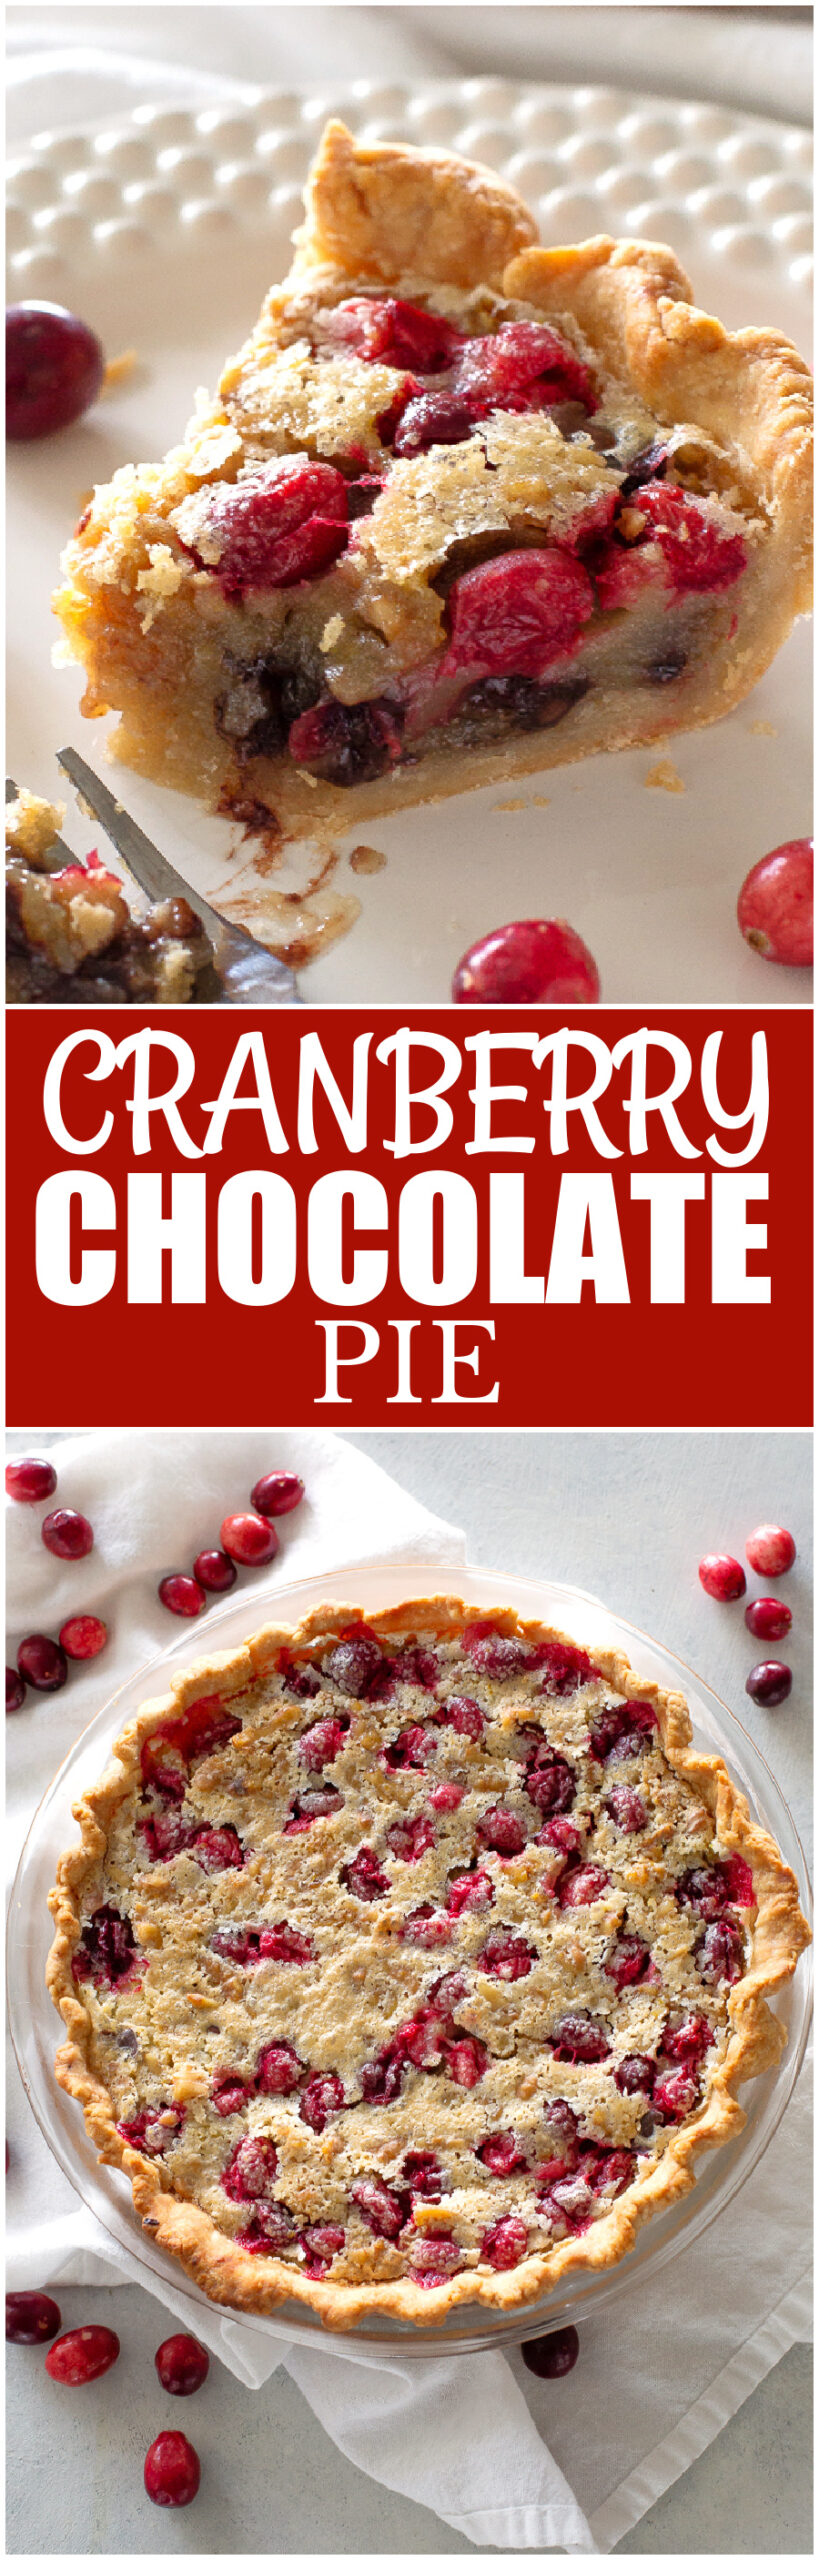 cranberry chocolate pie scaled - Cranberry Chocolate Pie